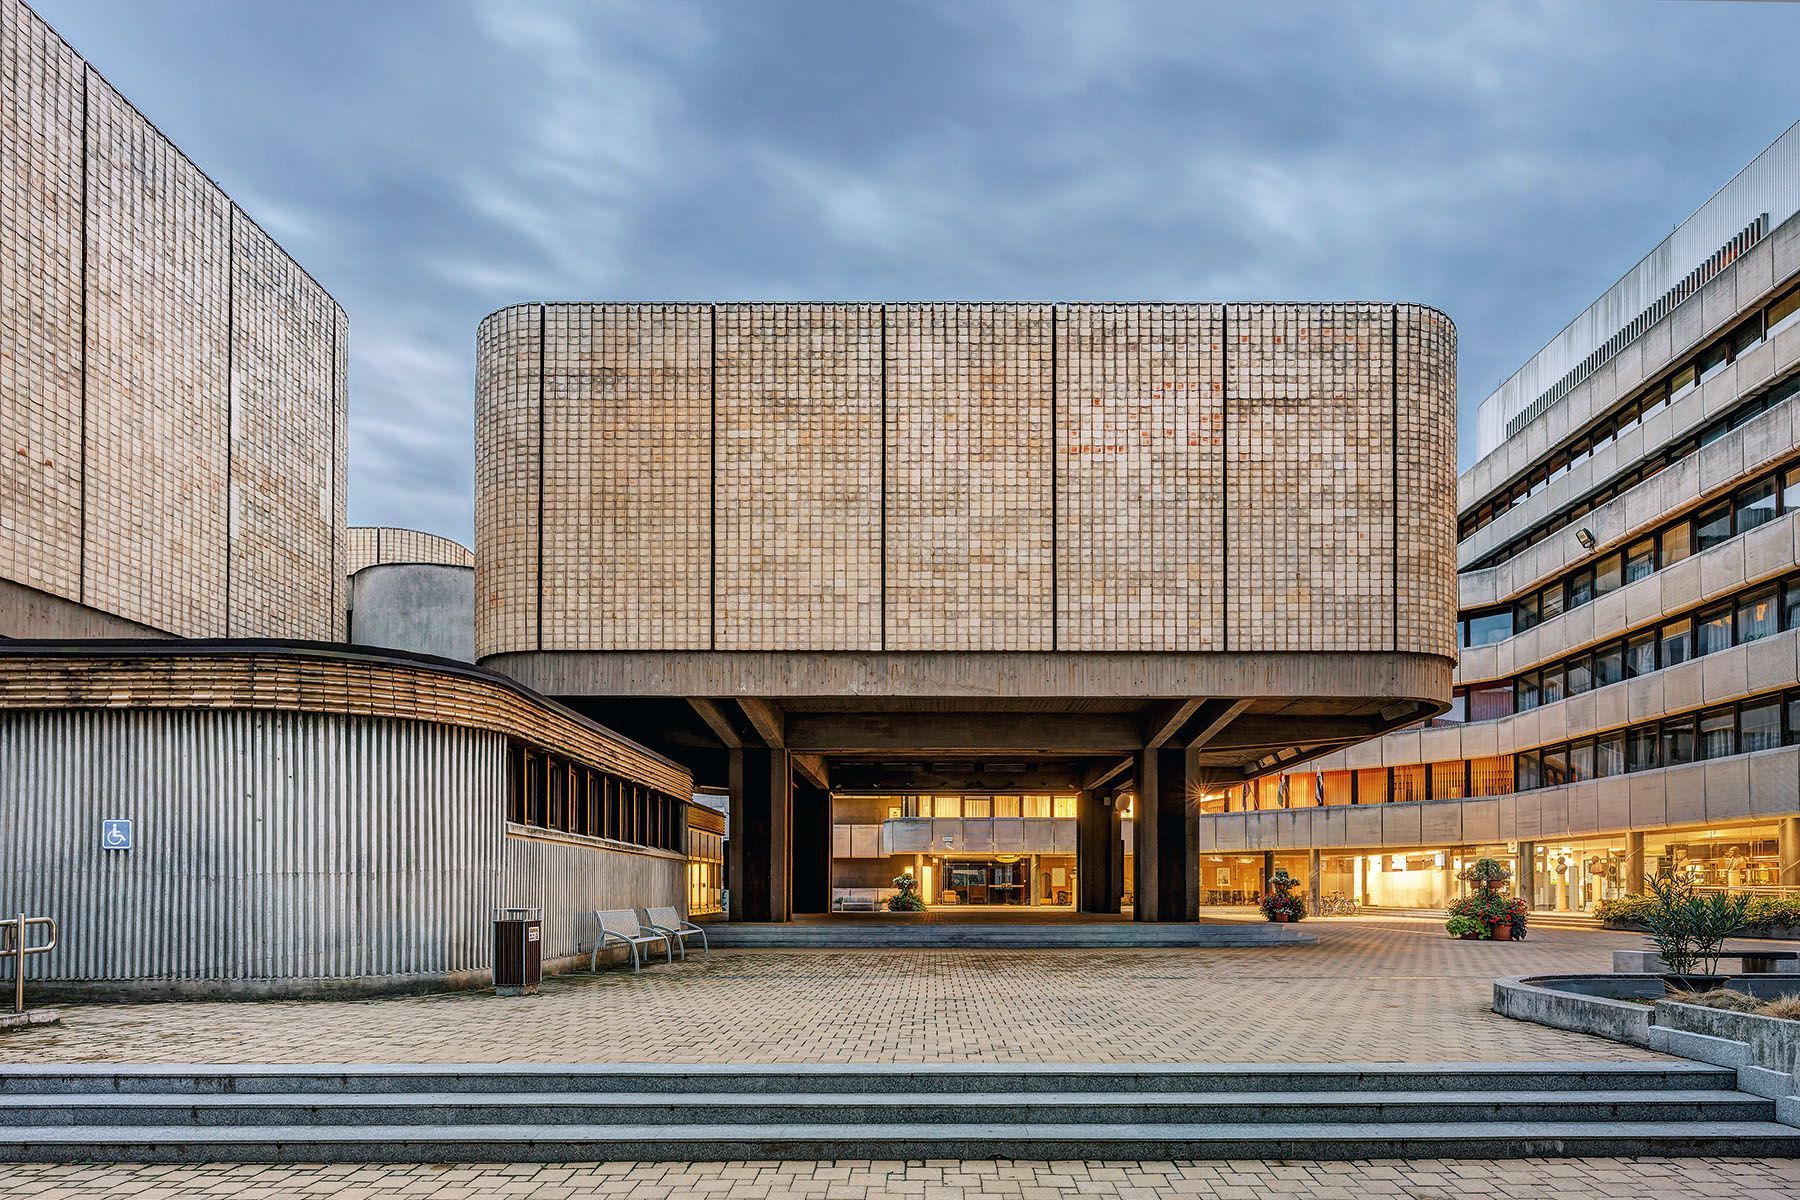 Salgótarján: the essence of late modern architecture